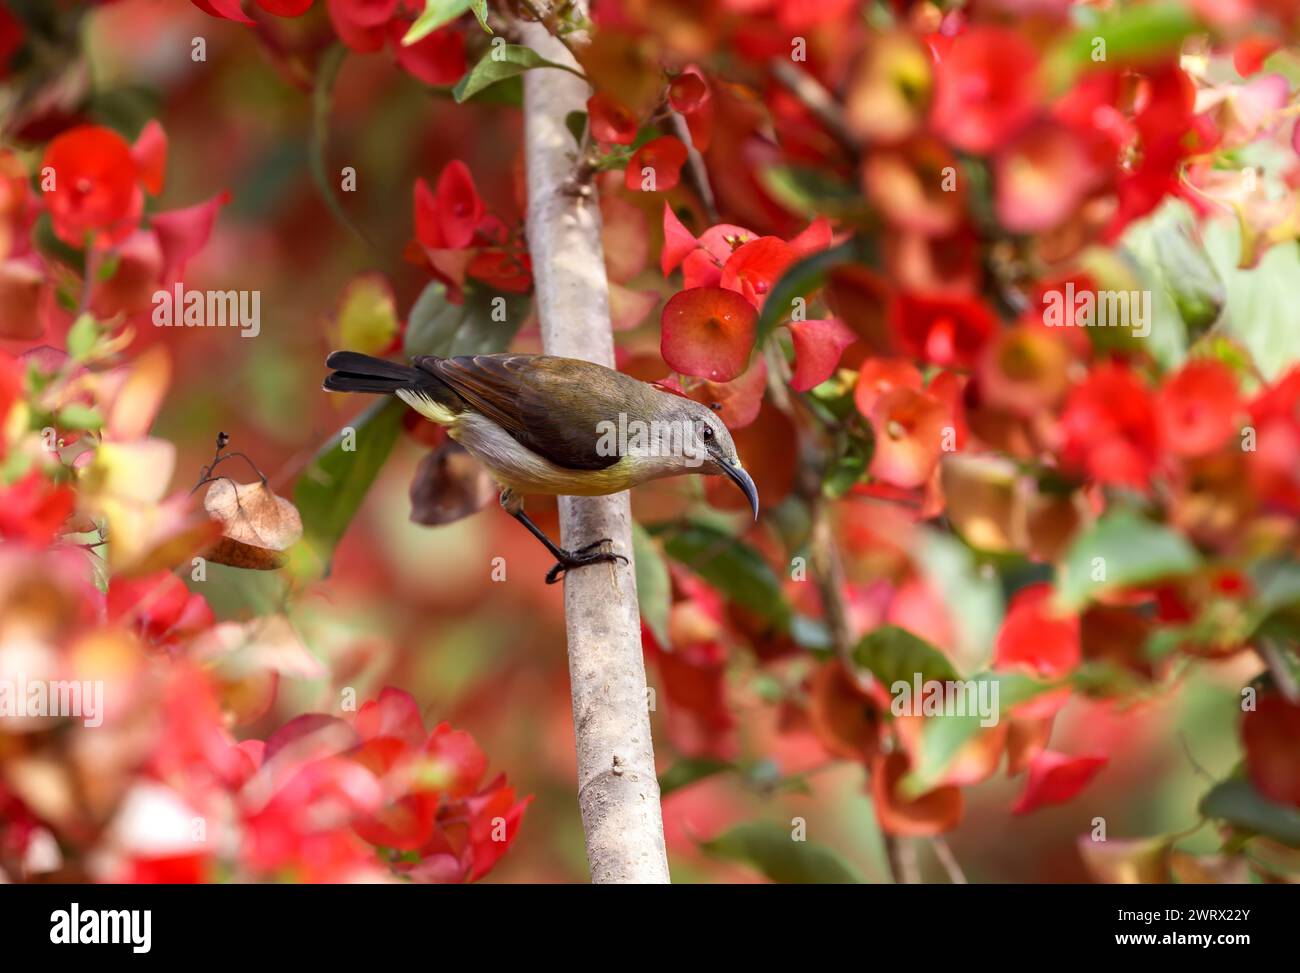 sunbird on flower.this photo was taken from Bangladesh. Stock Photo